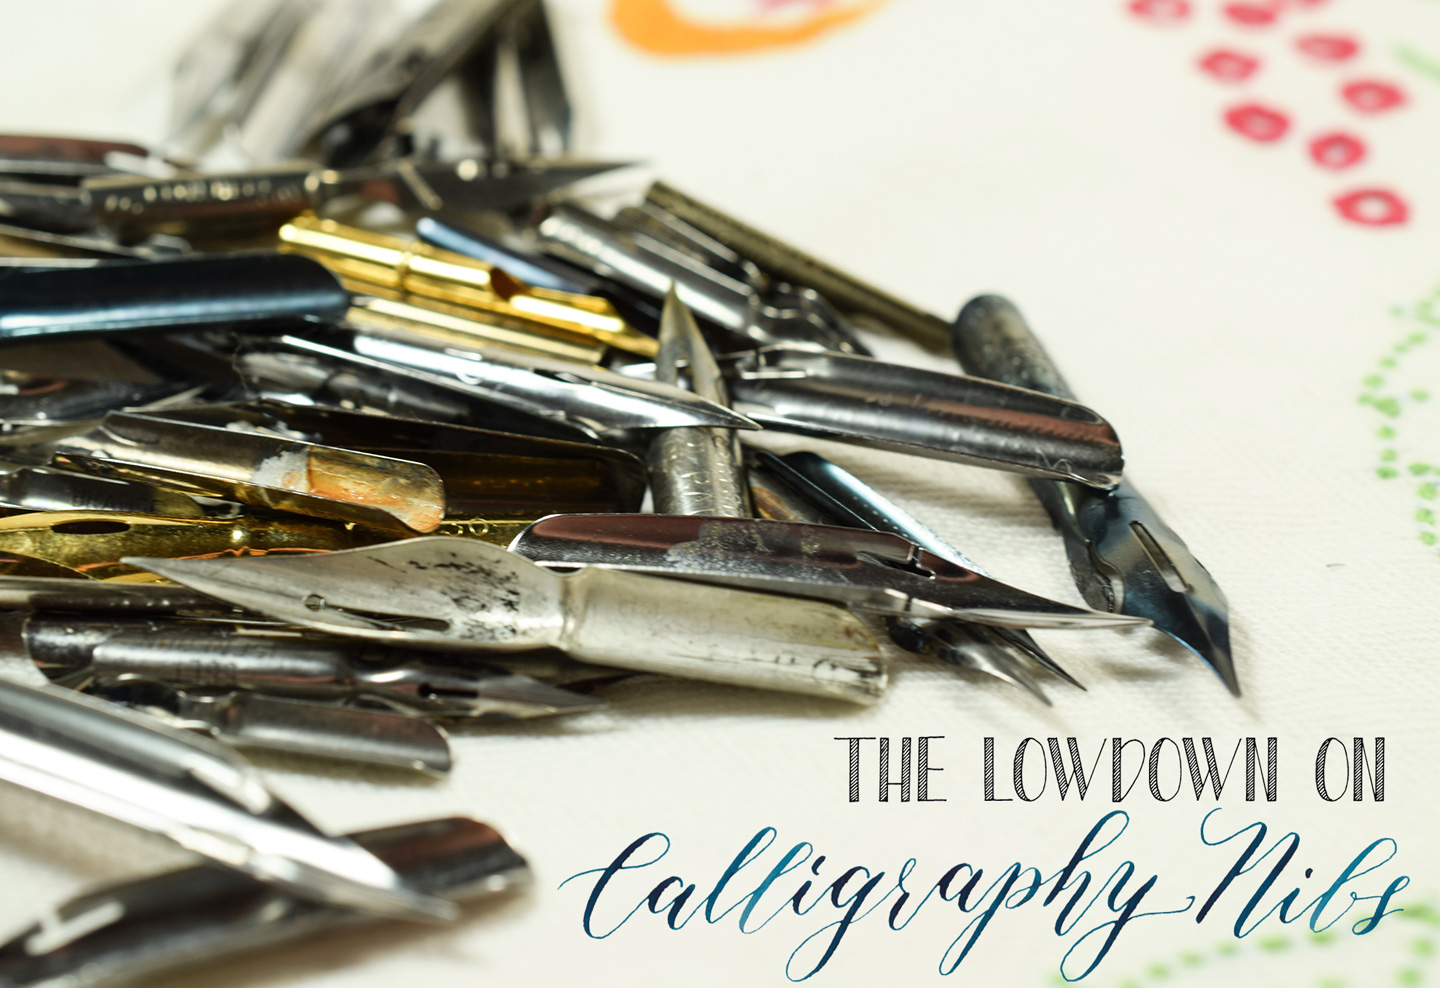 The Lowdown on Calligraphy Nibs